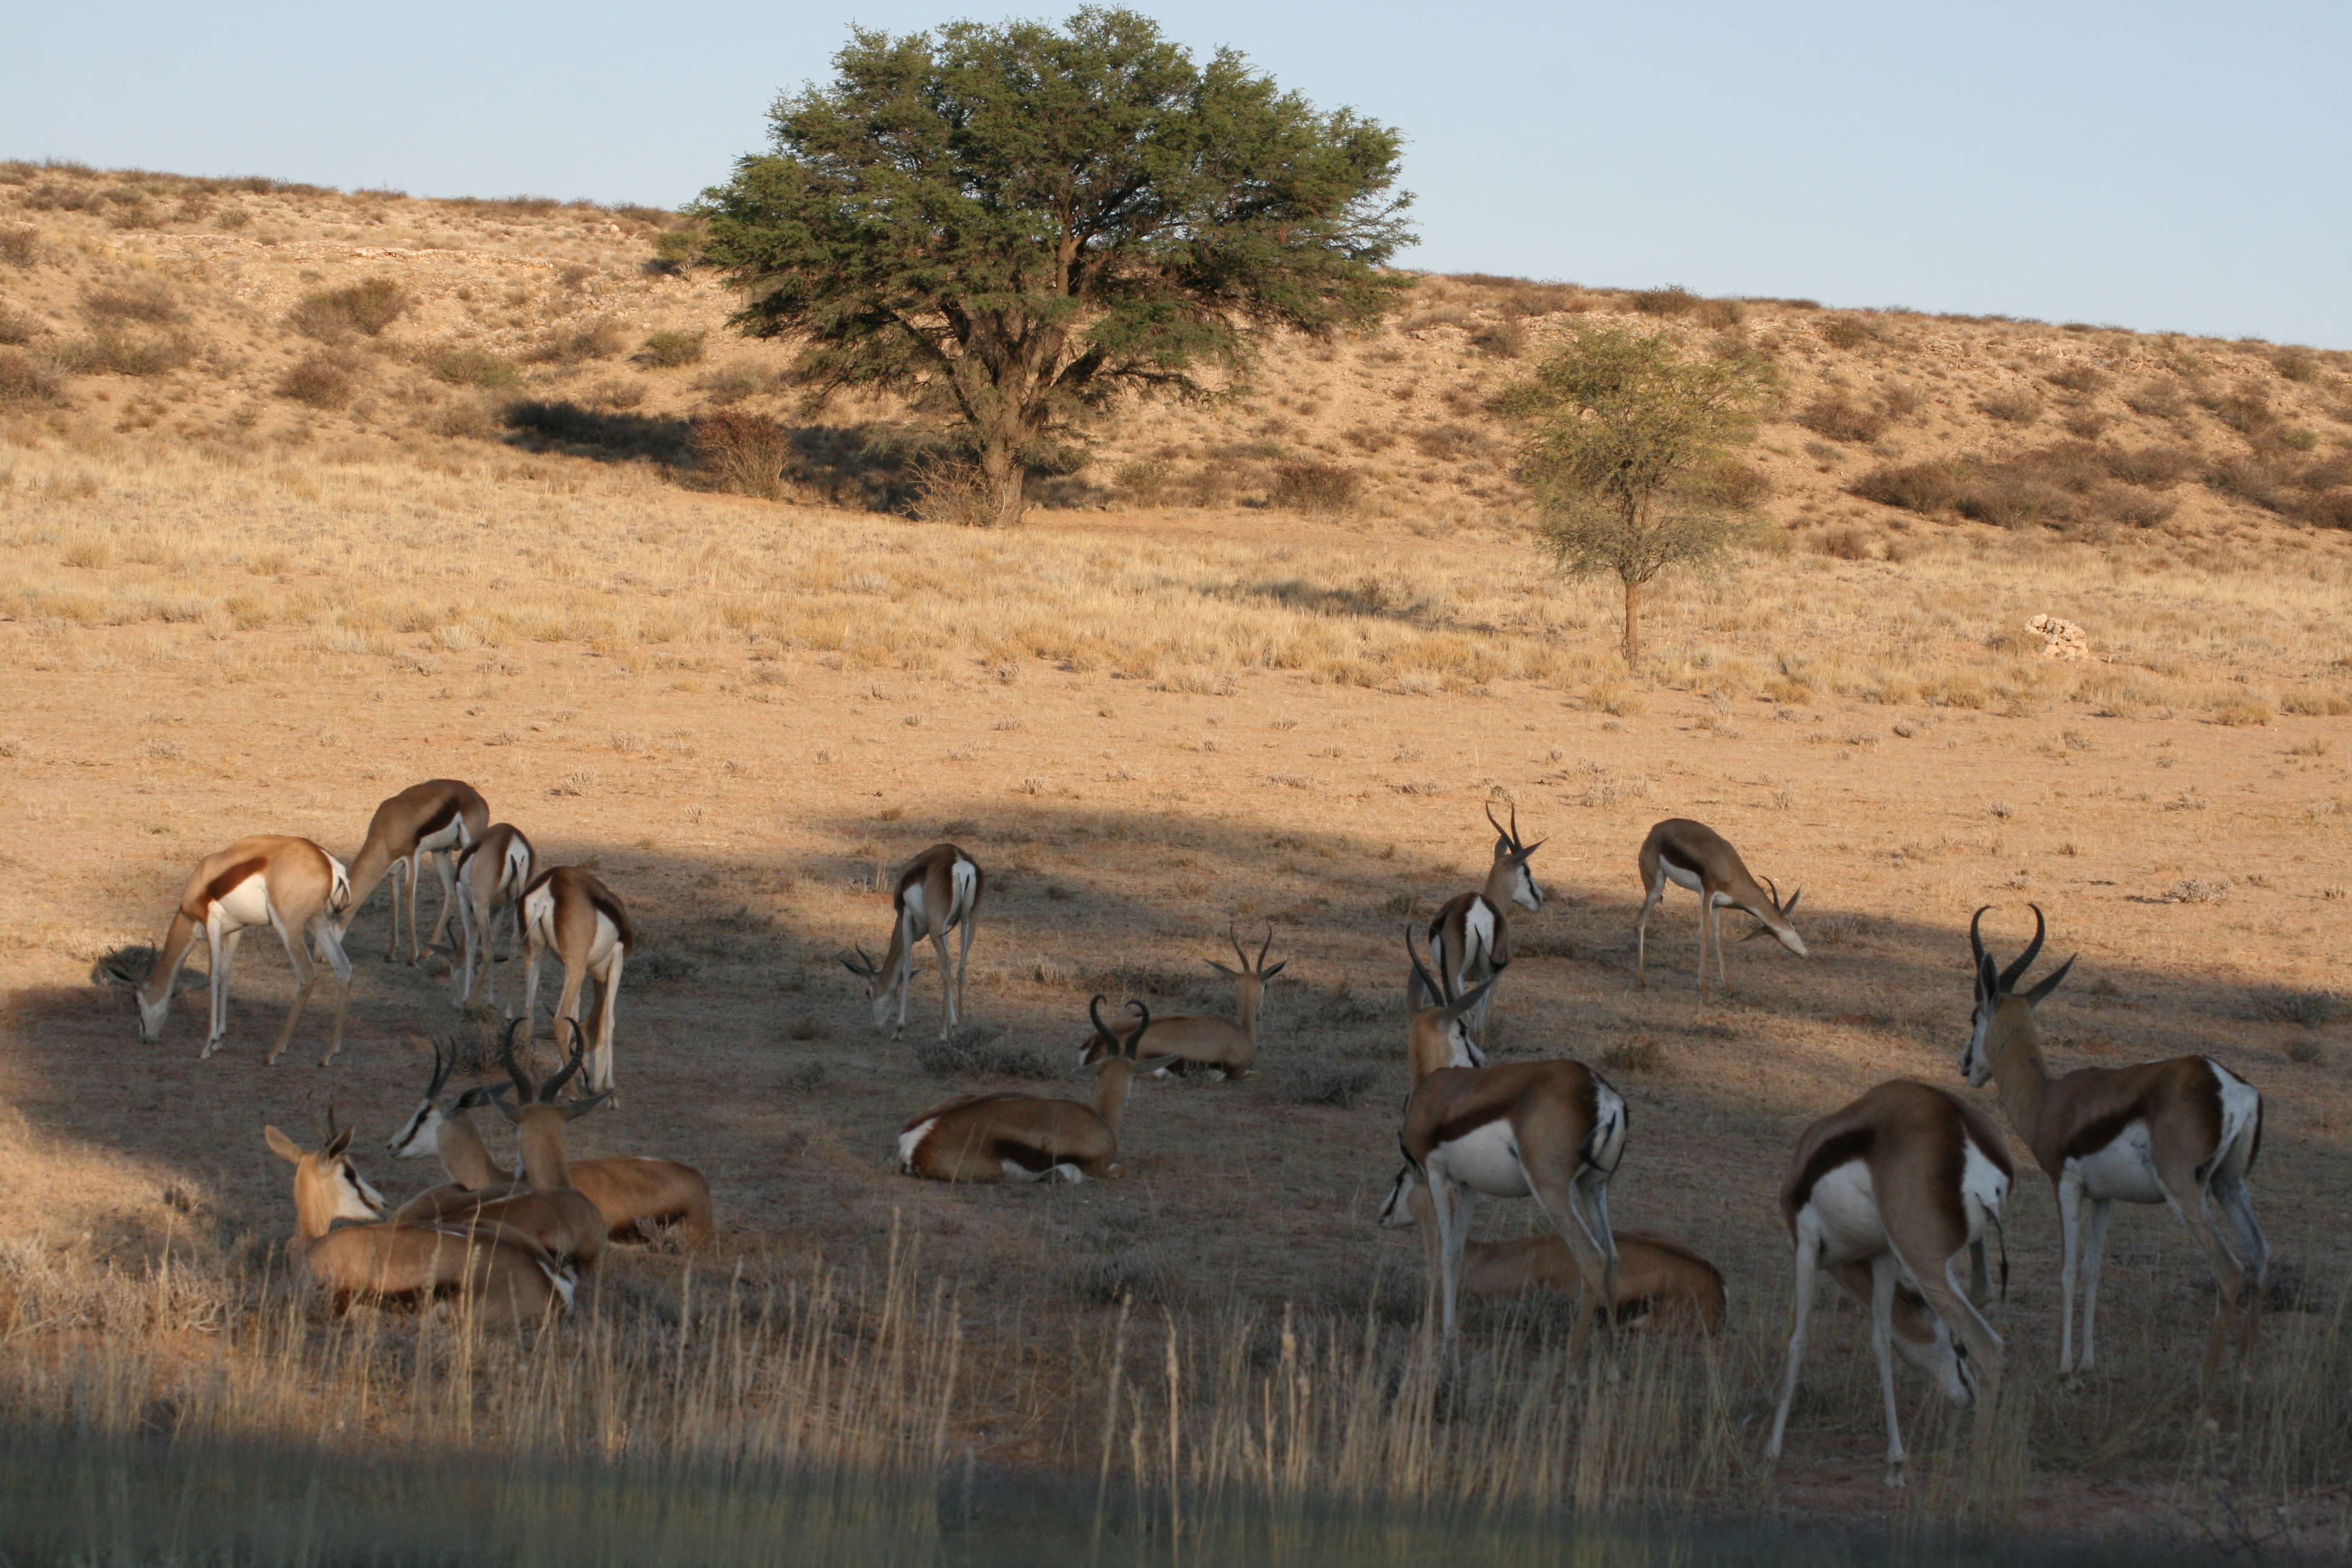 Gazelle in South Africa